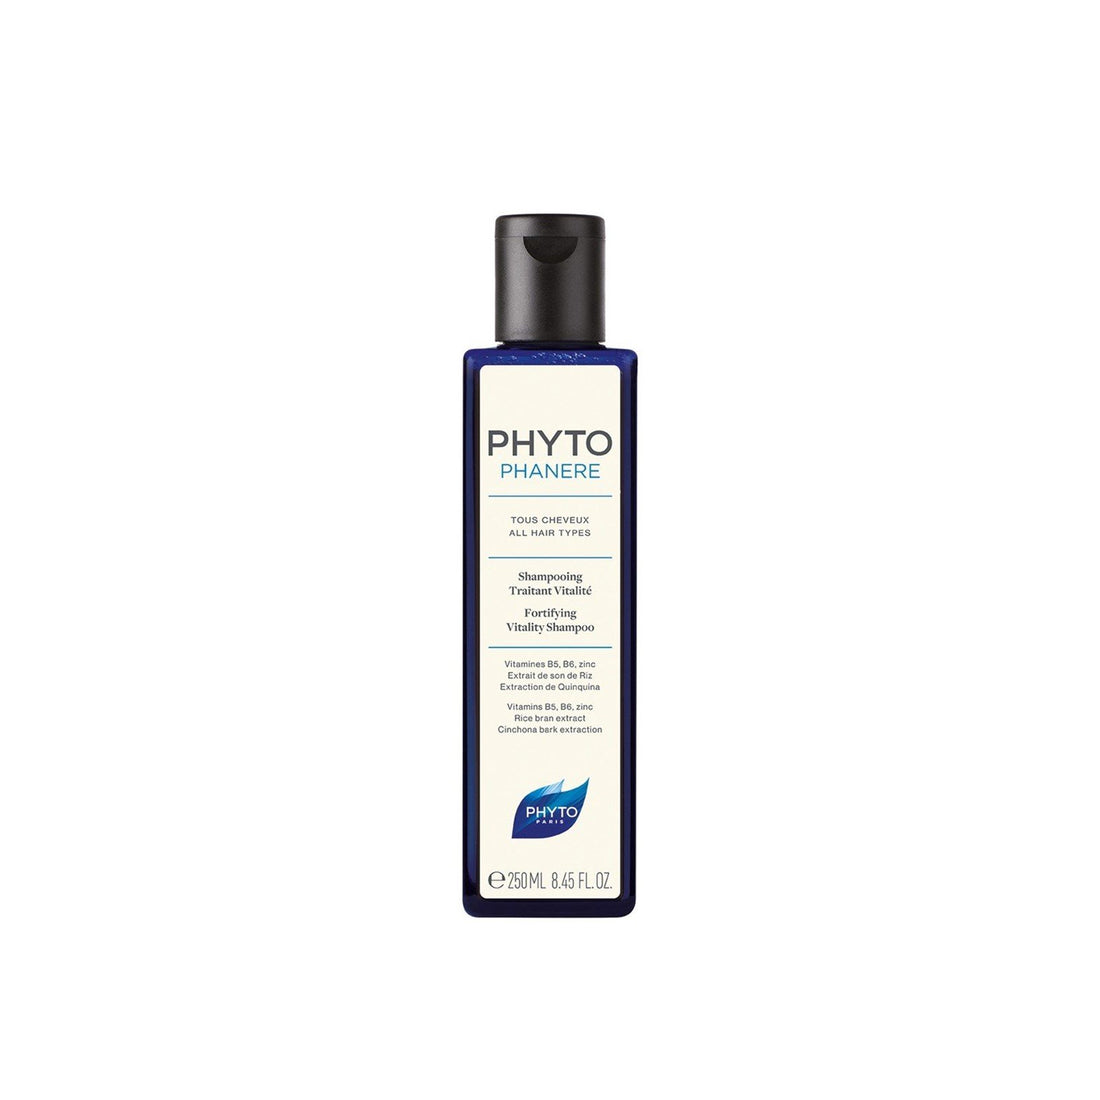 Phytophanere Fortifying Vitality Shampoo 250ml